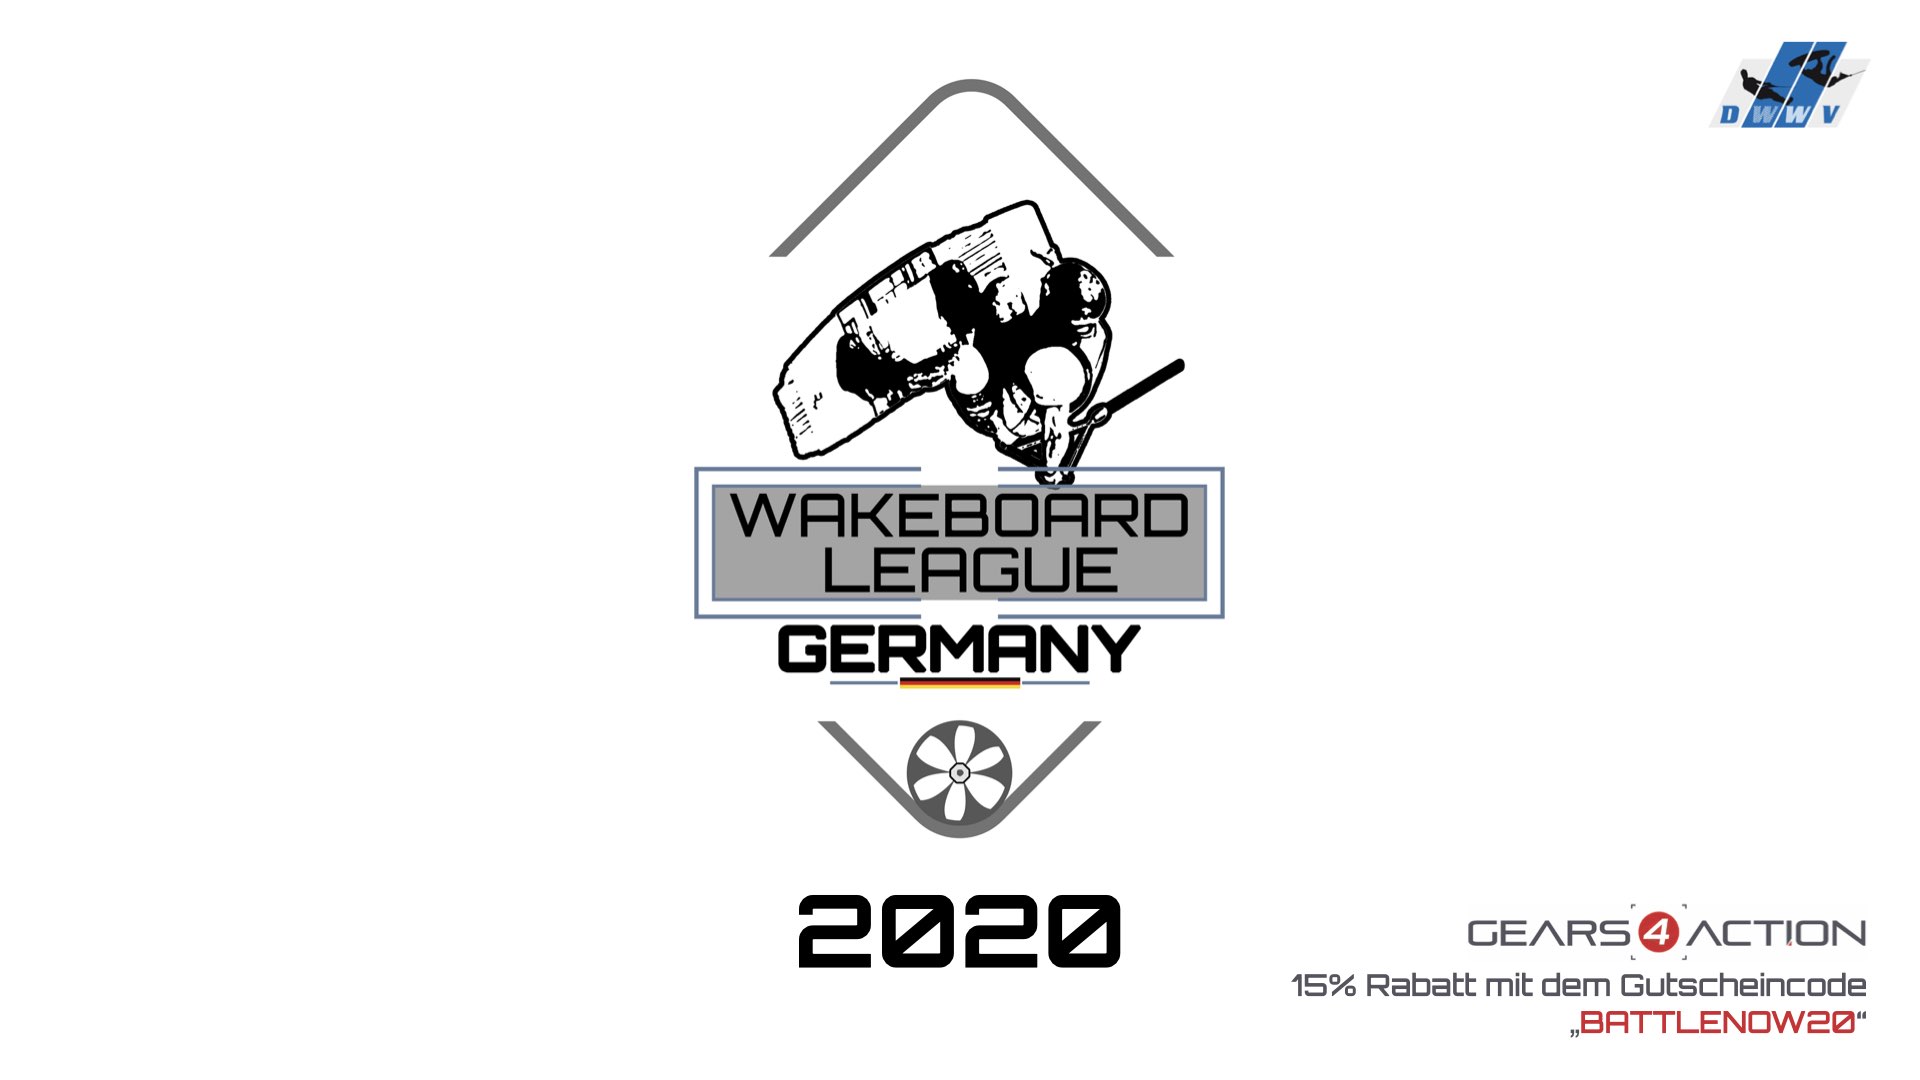 DWWV Wakeboard League Germany - Battle 5 - Best Flat-/Whip-Trick